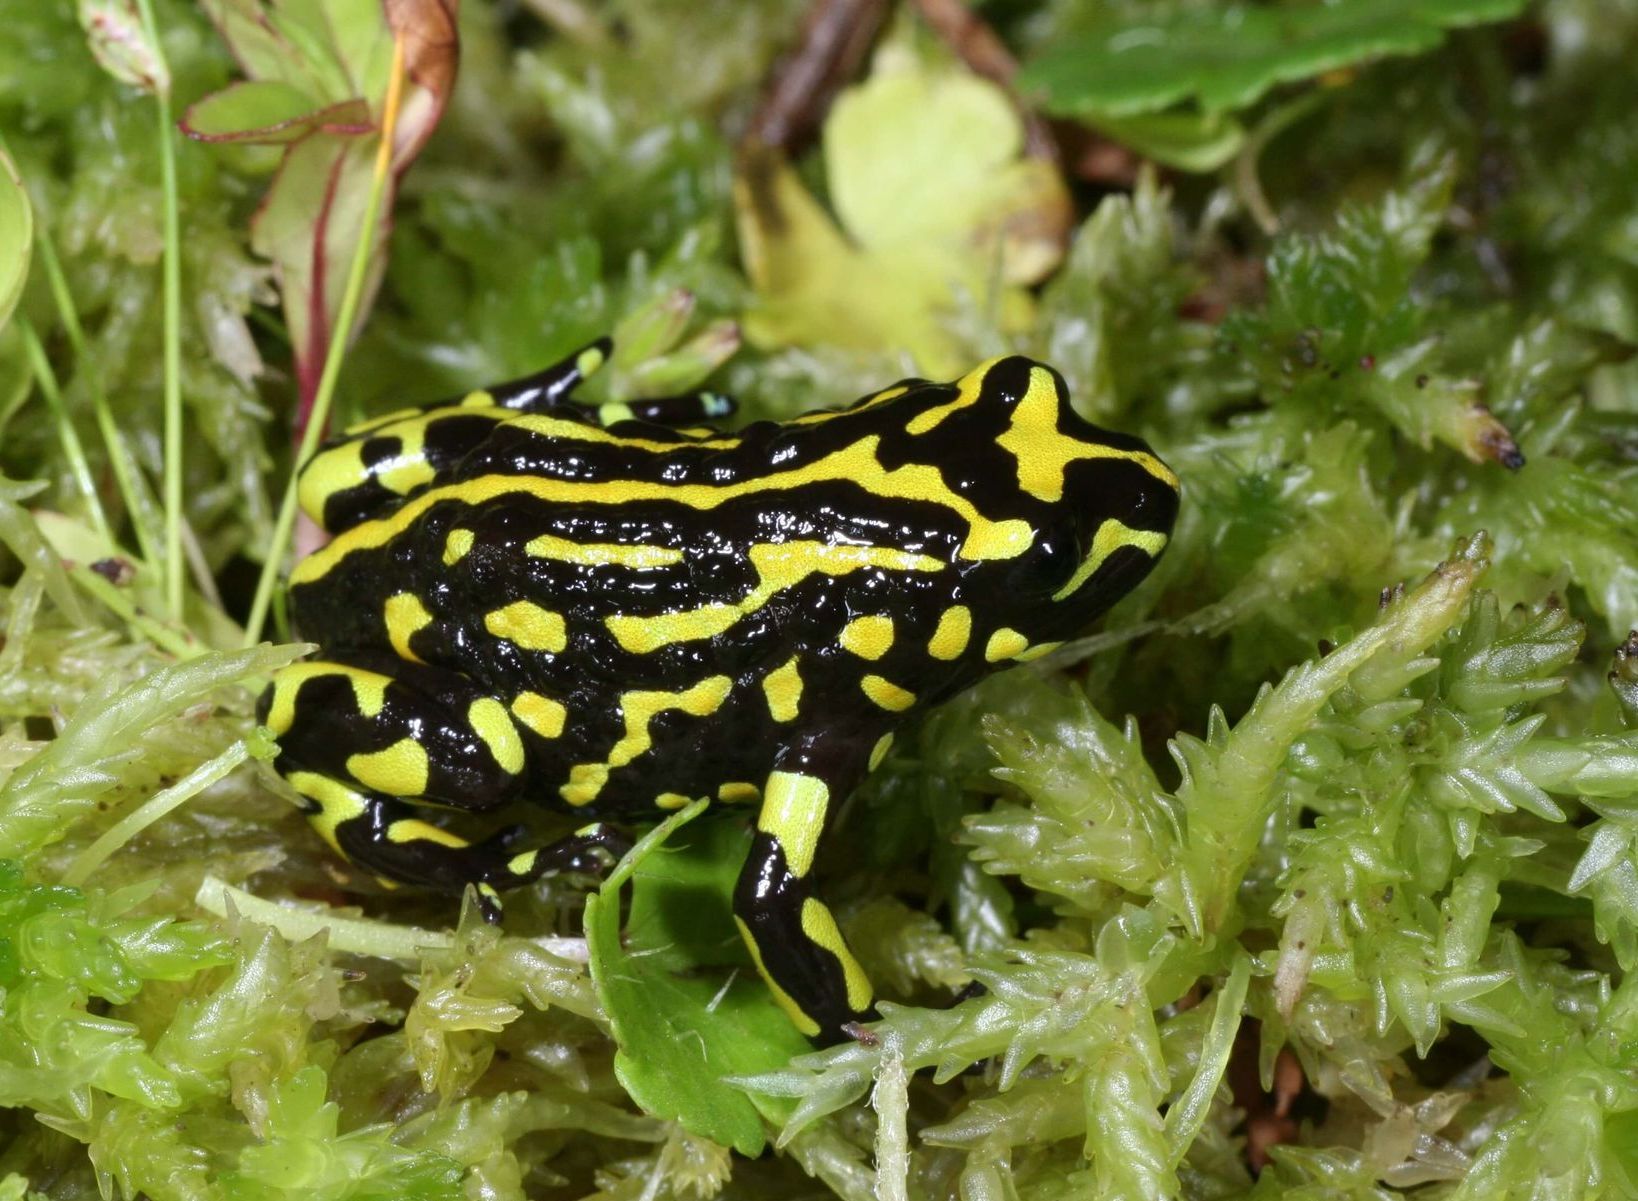 Close-up photo of the Corroboree frog